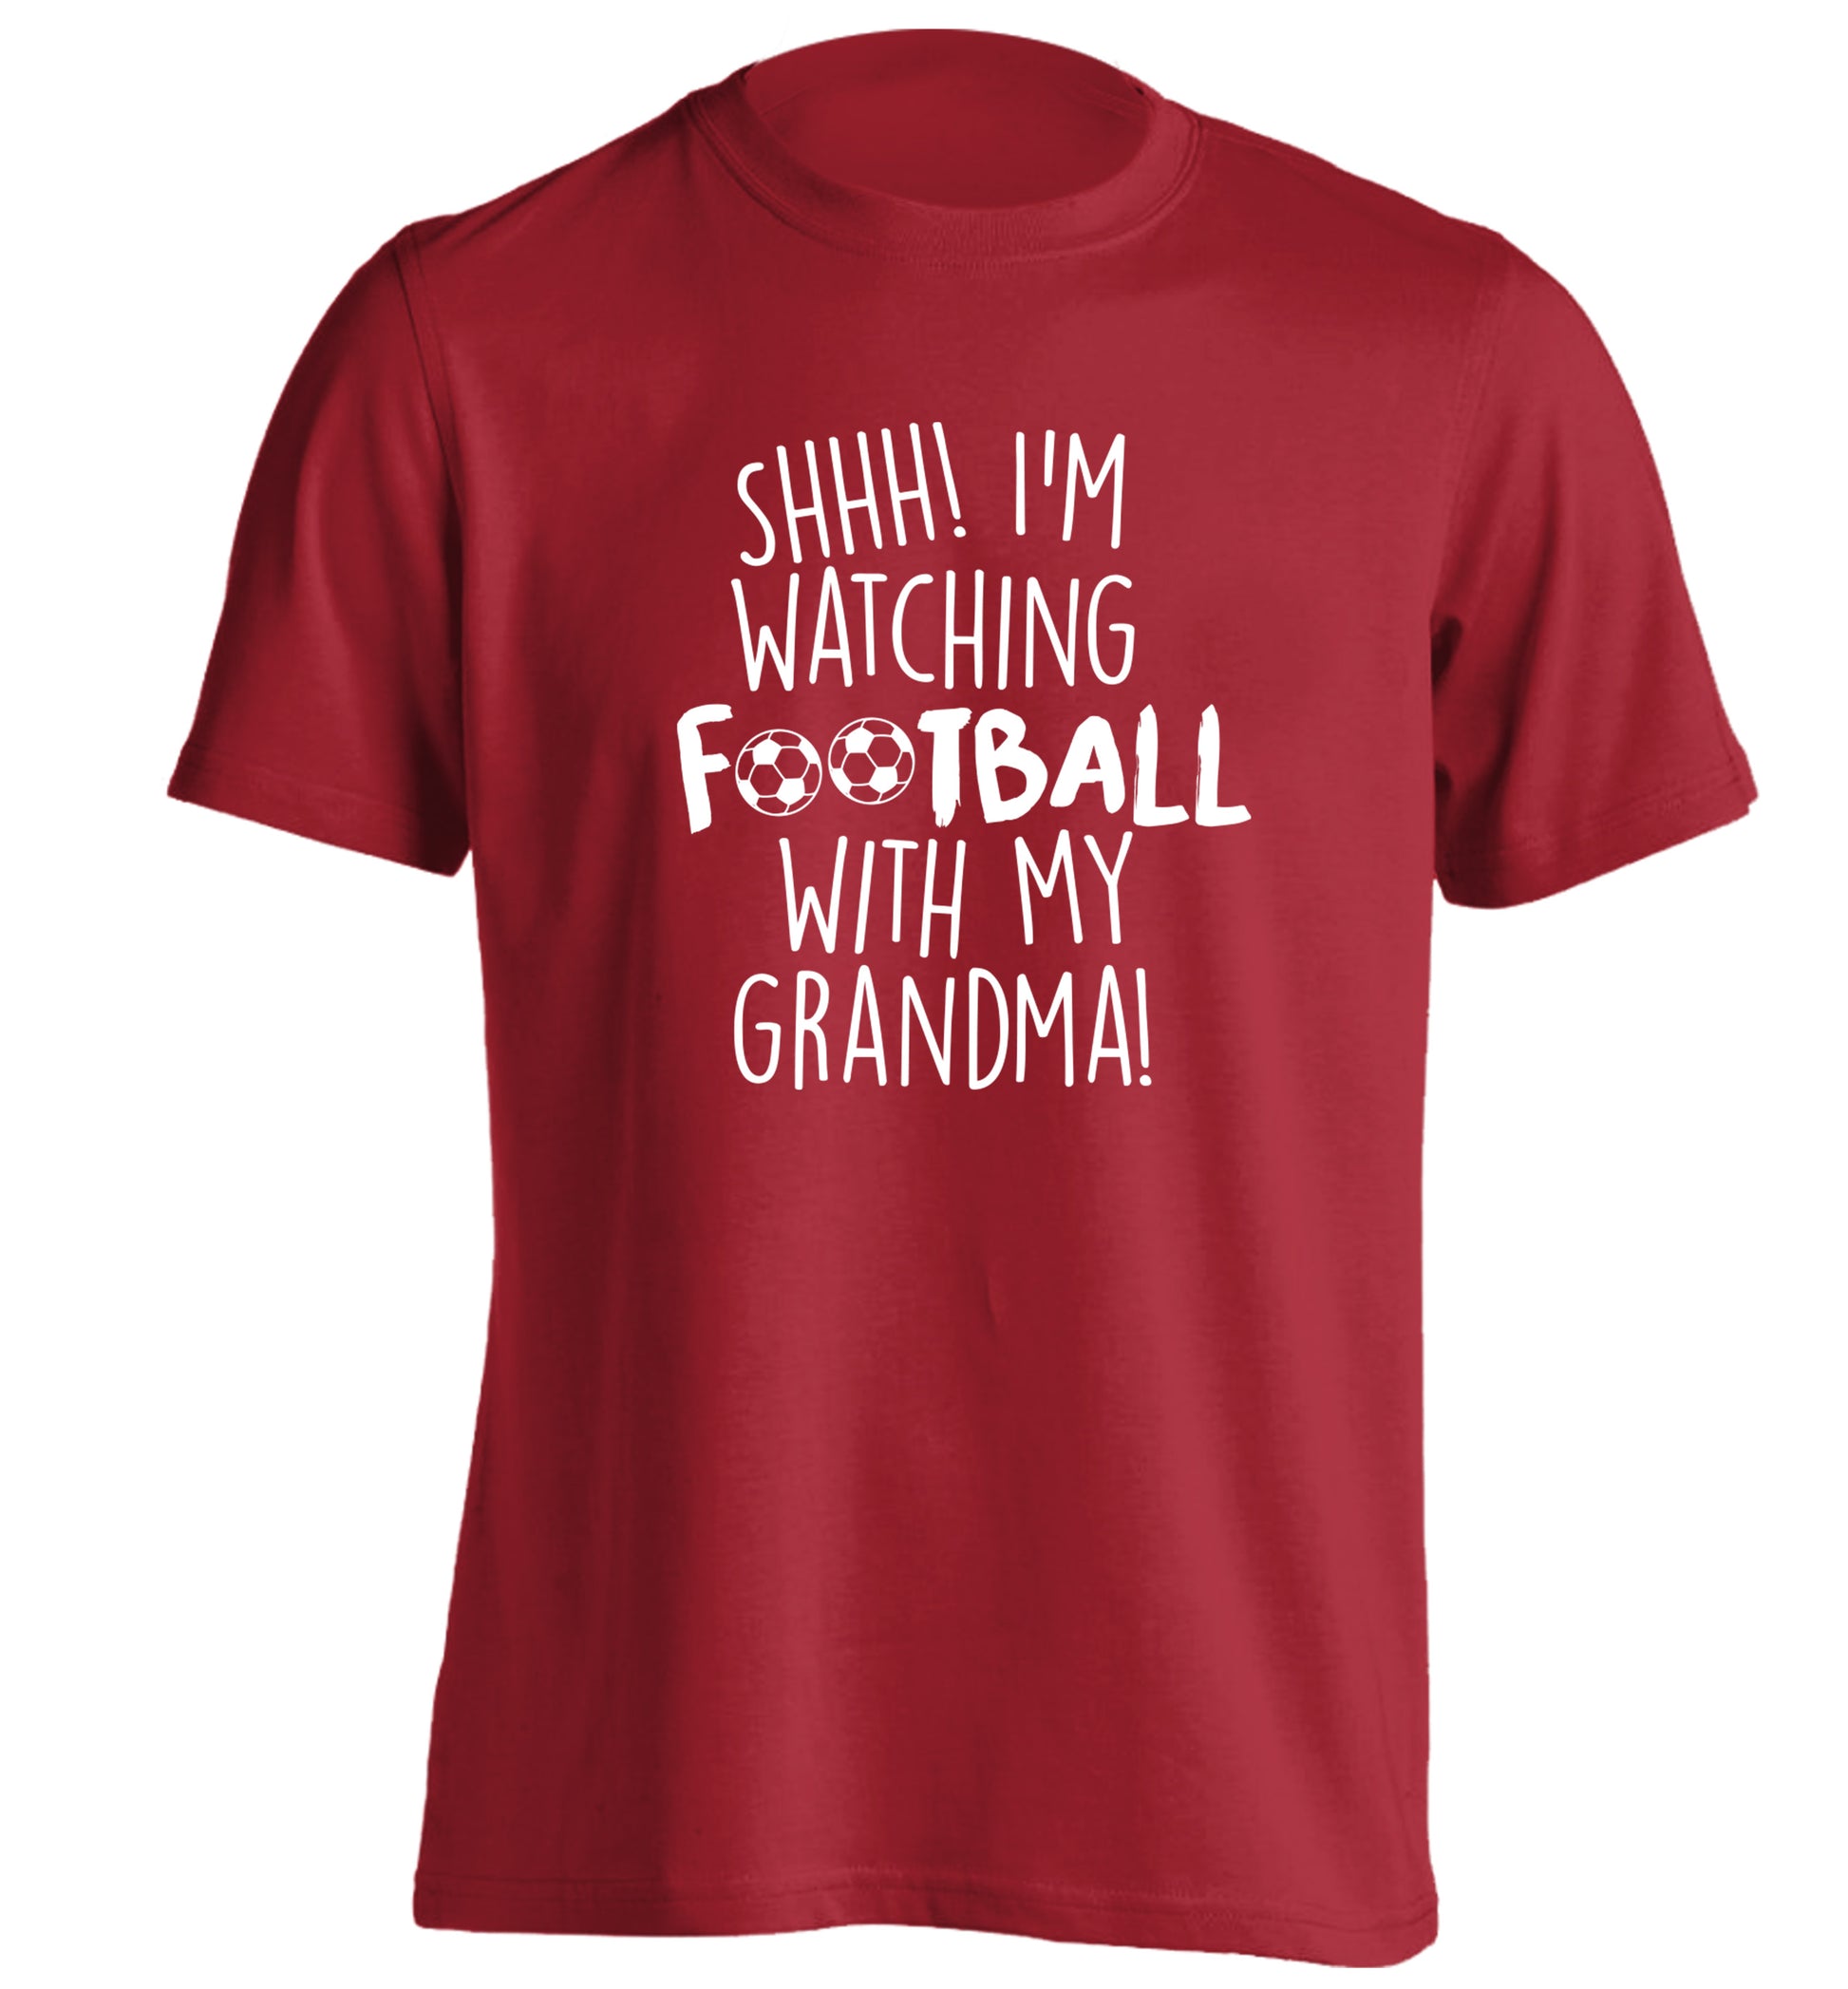 Shhh I'm watching football with my grandma adults unisexred Tshirt 2XL